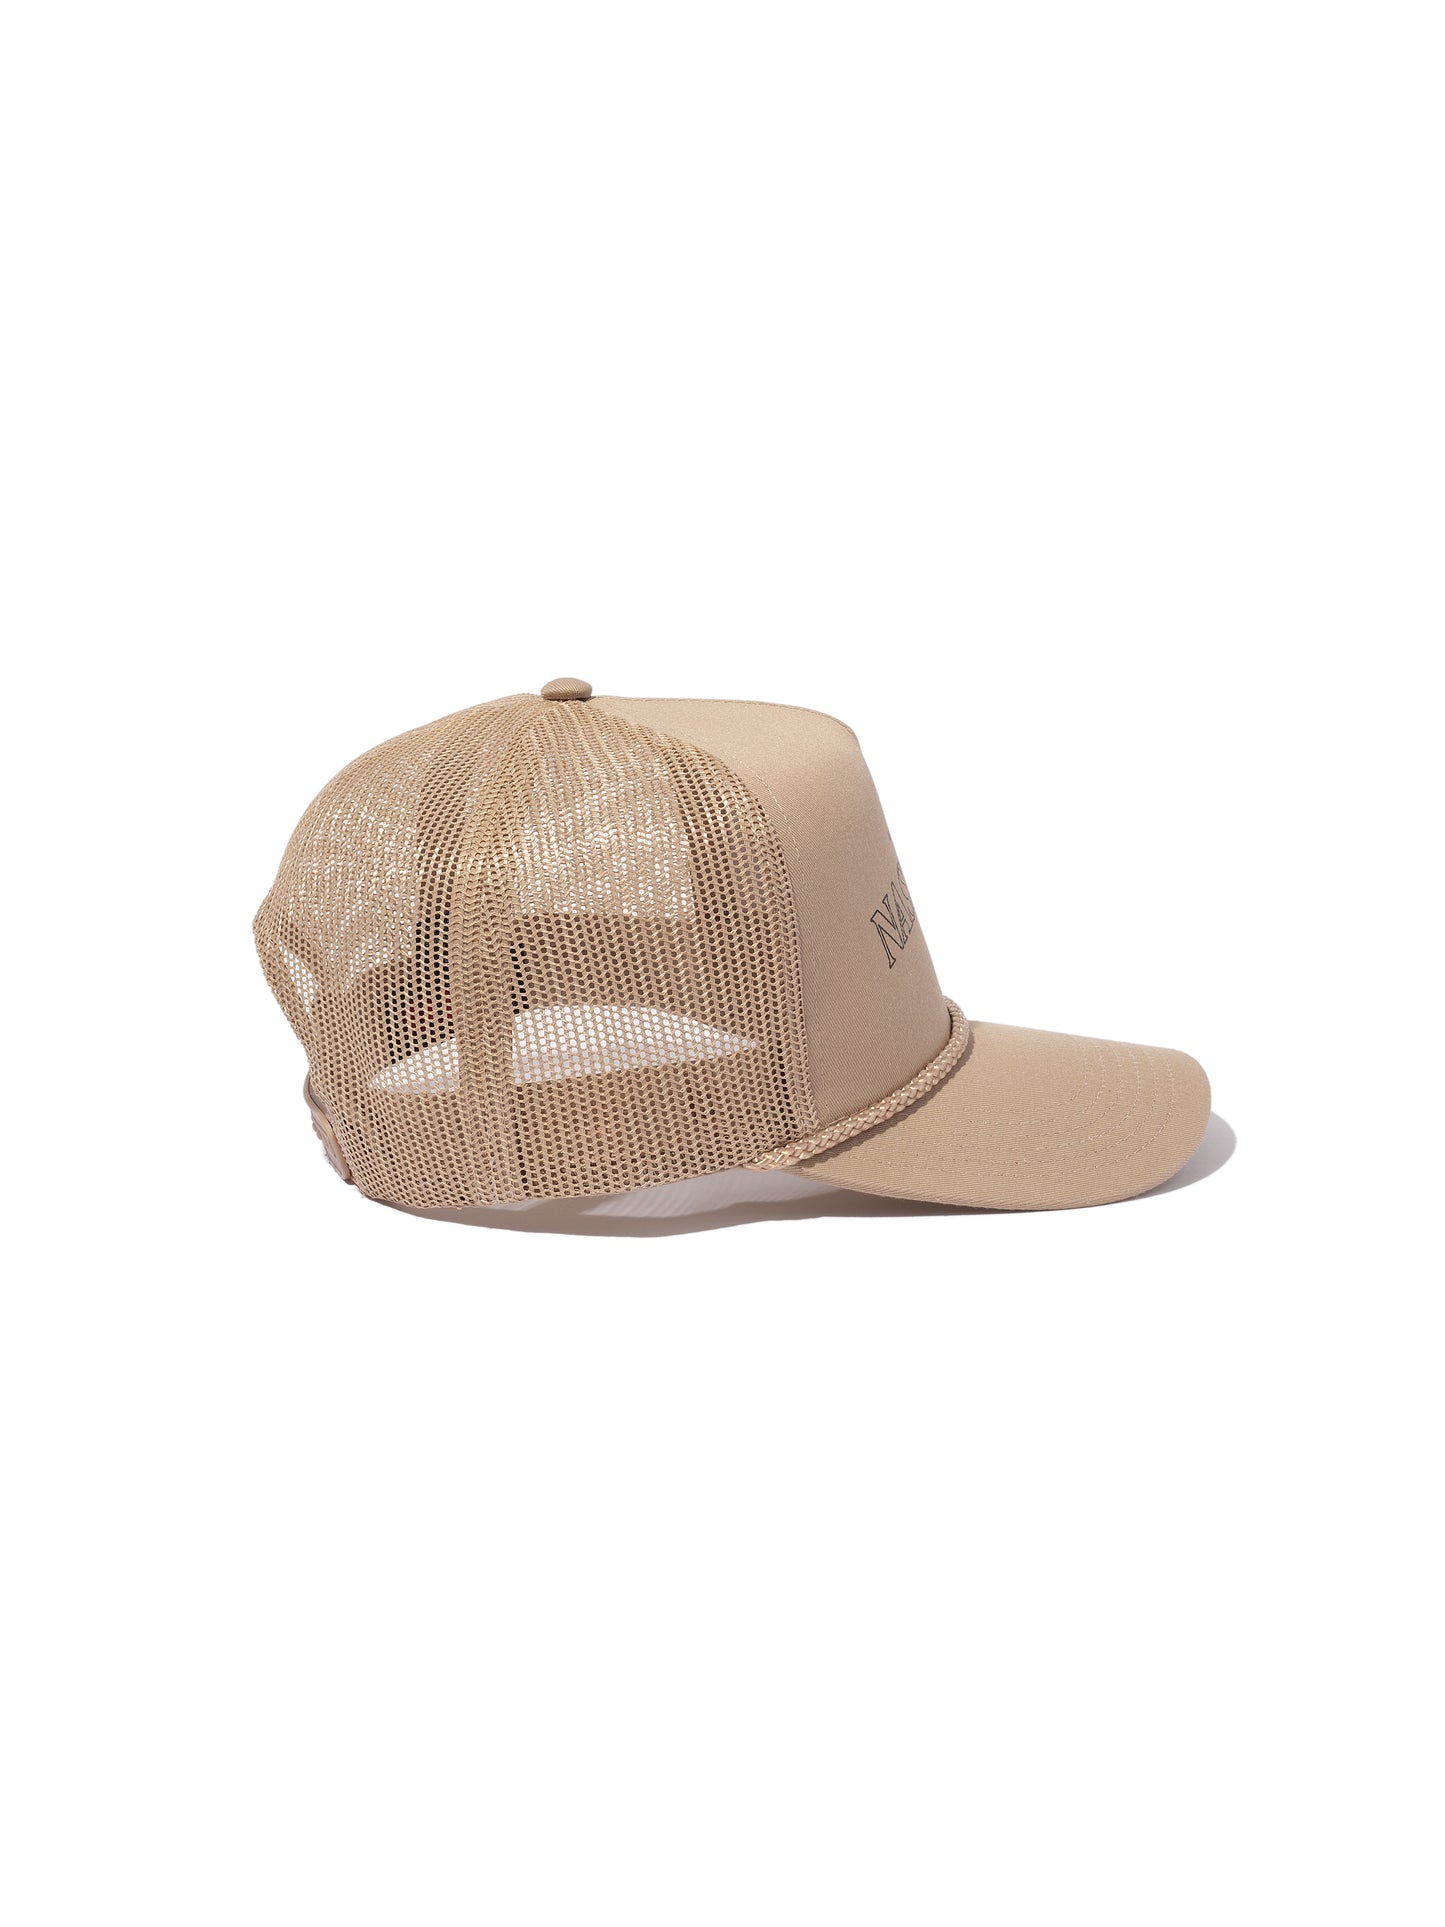 Nashville Trucker Hat | Beige | Product Detail Image | Uncommon Lifestyle